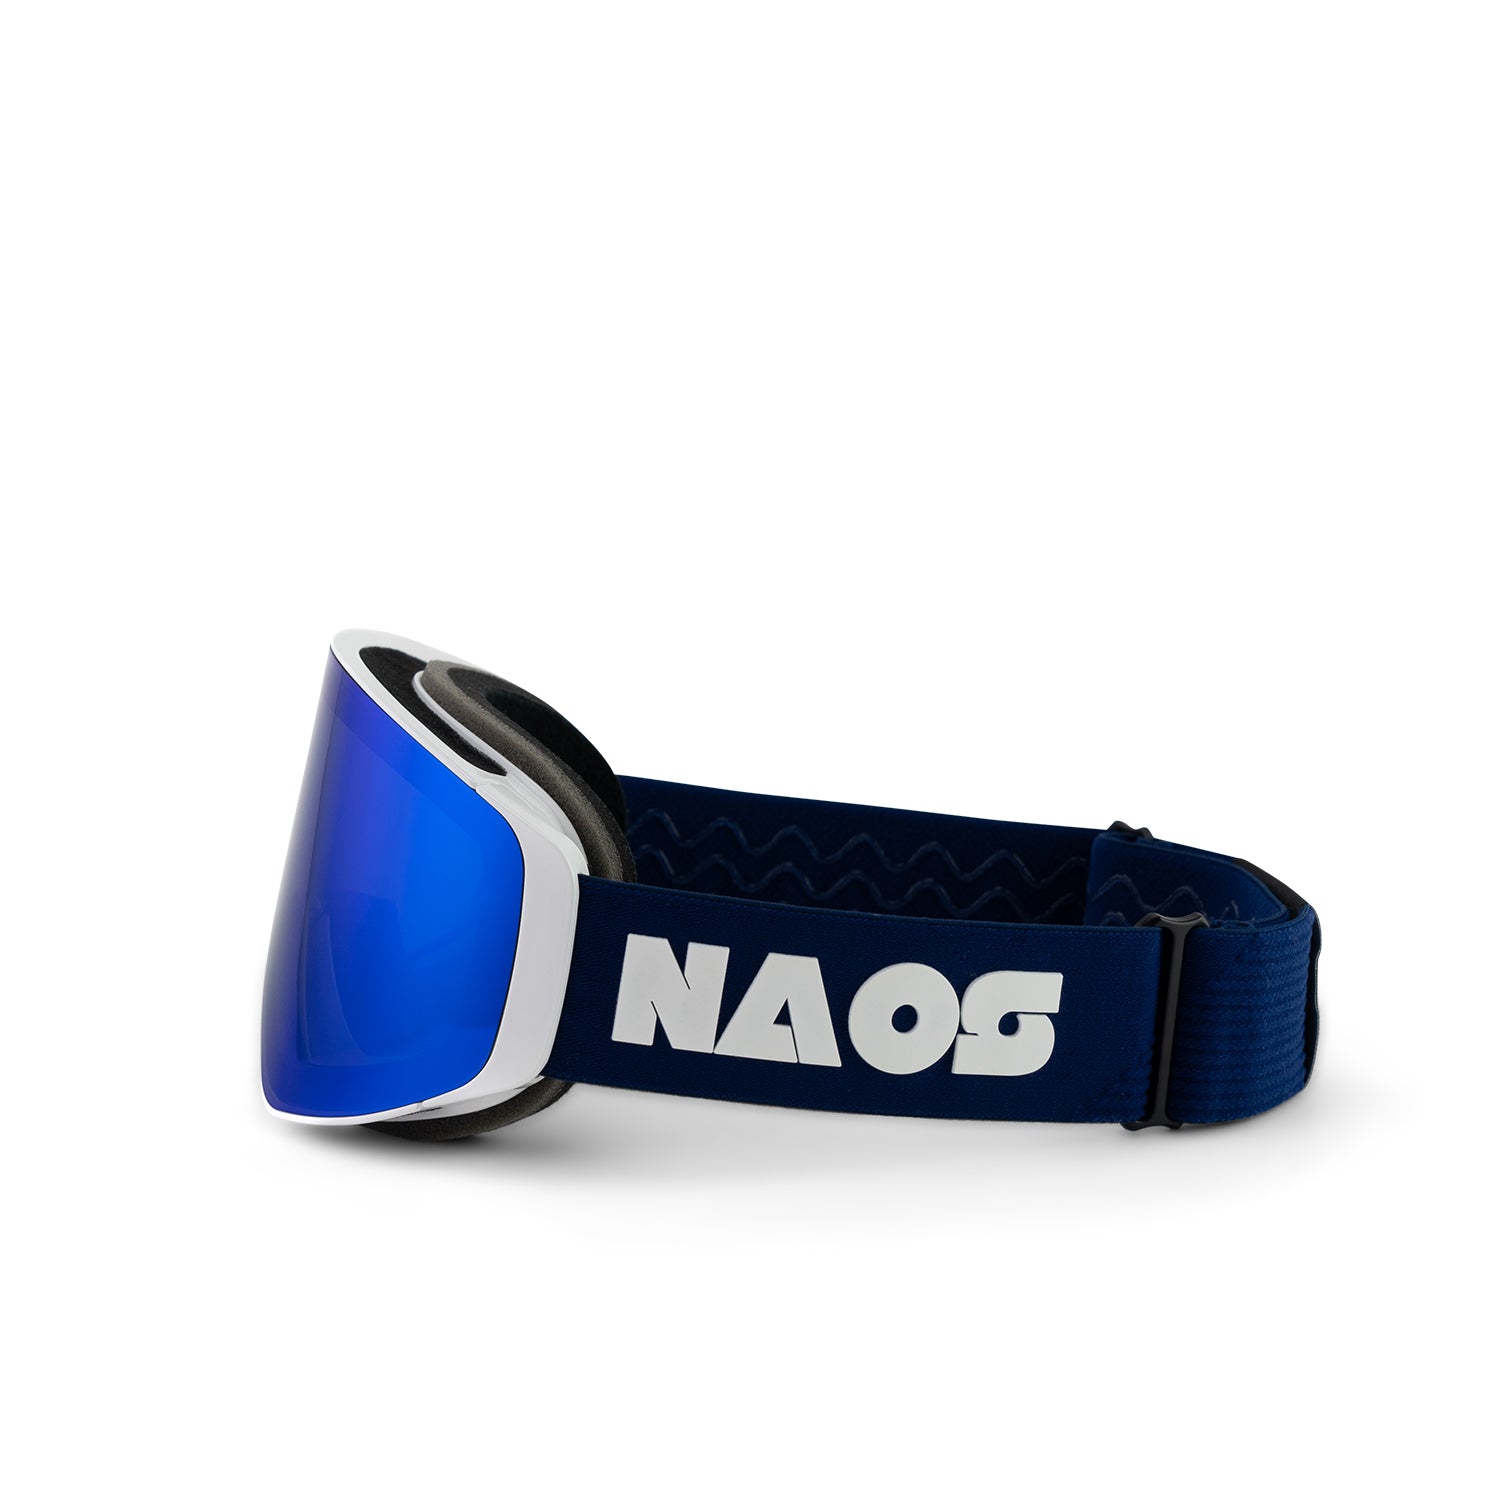 NAOS__a_model-selvasnow_b_strap-navy_blue_c_lense-blue-1.jpg